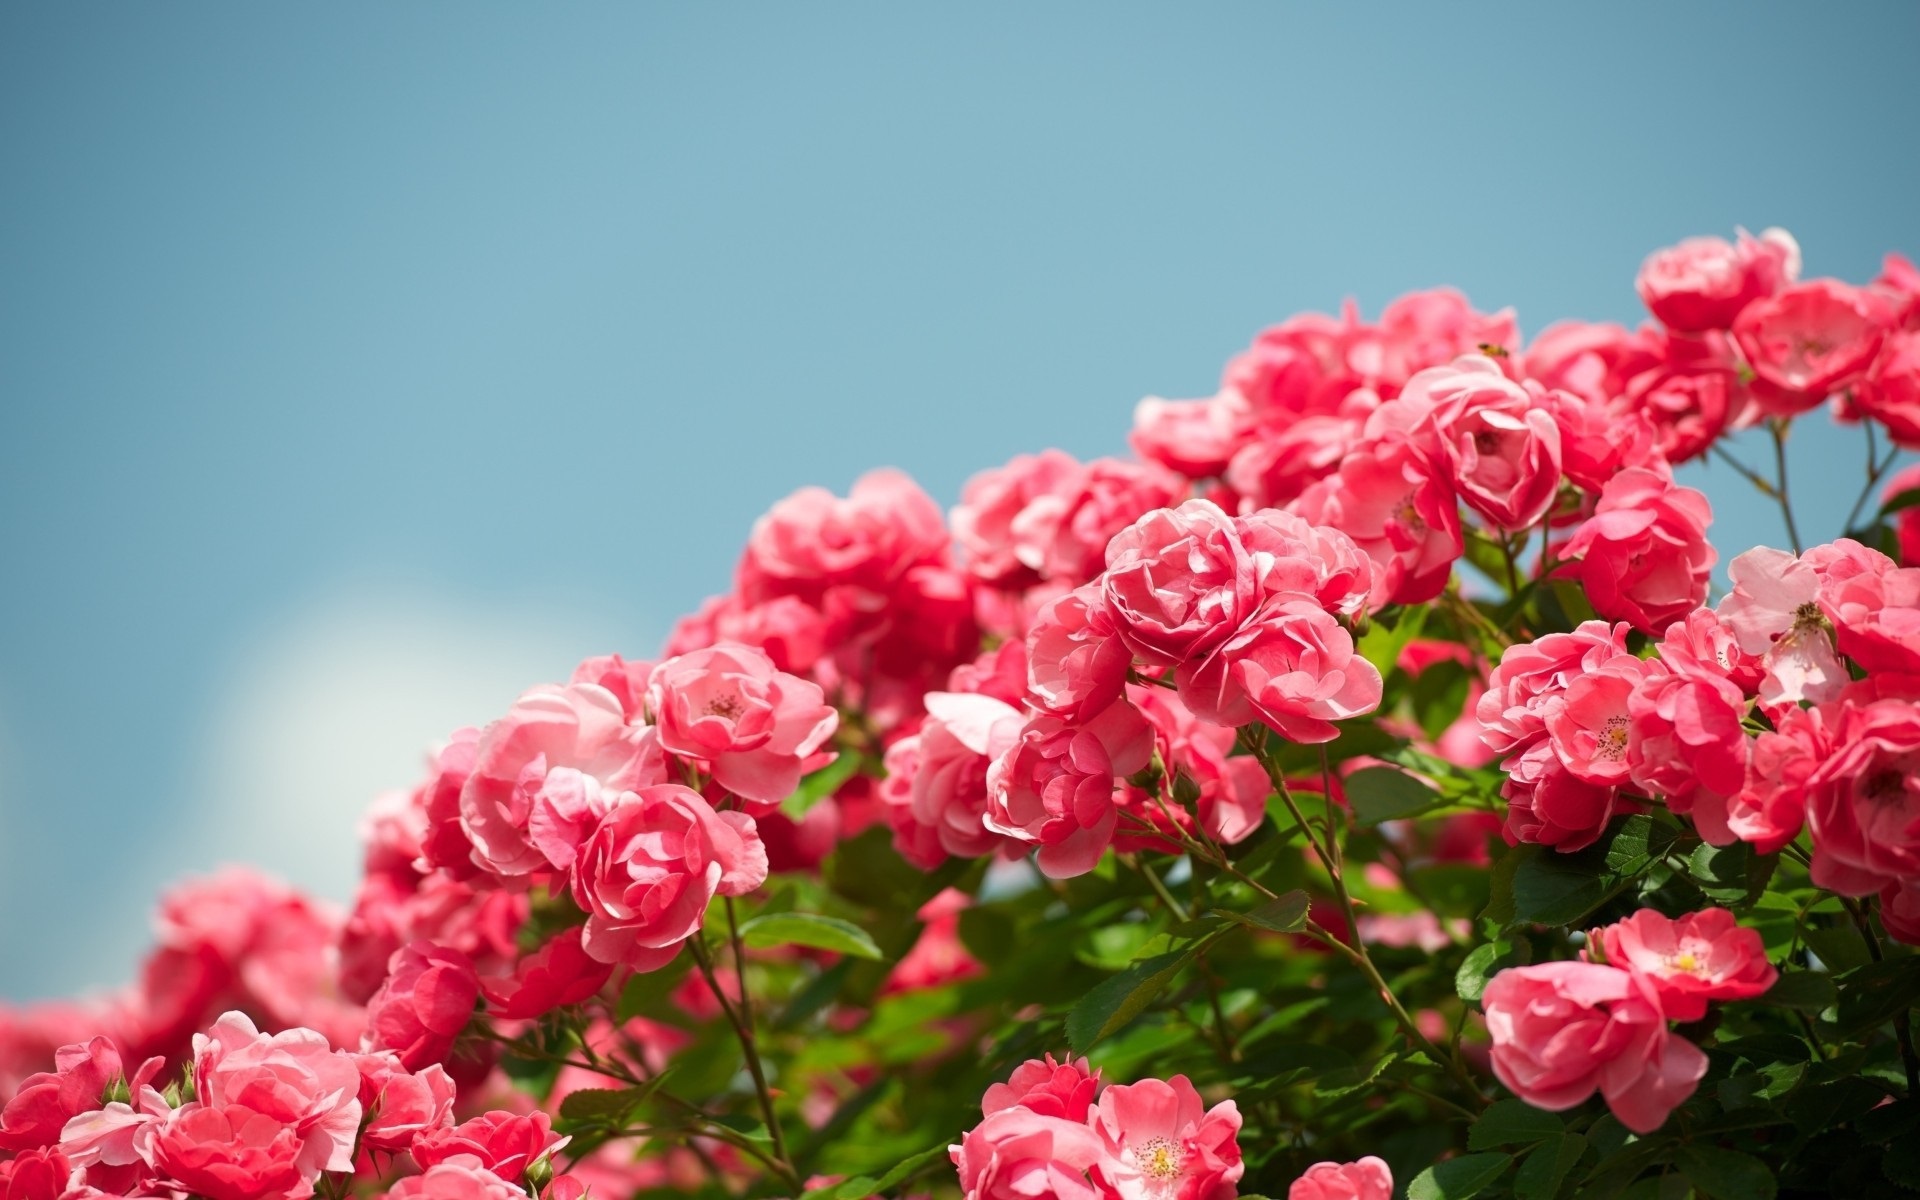 Garden flowers, beautiful red rose wallpaper | flowers ...